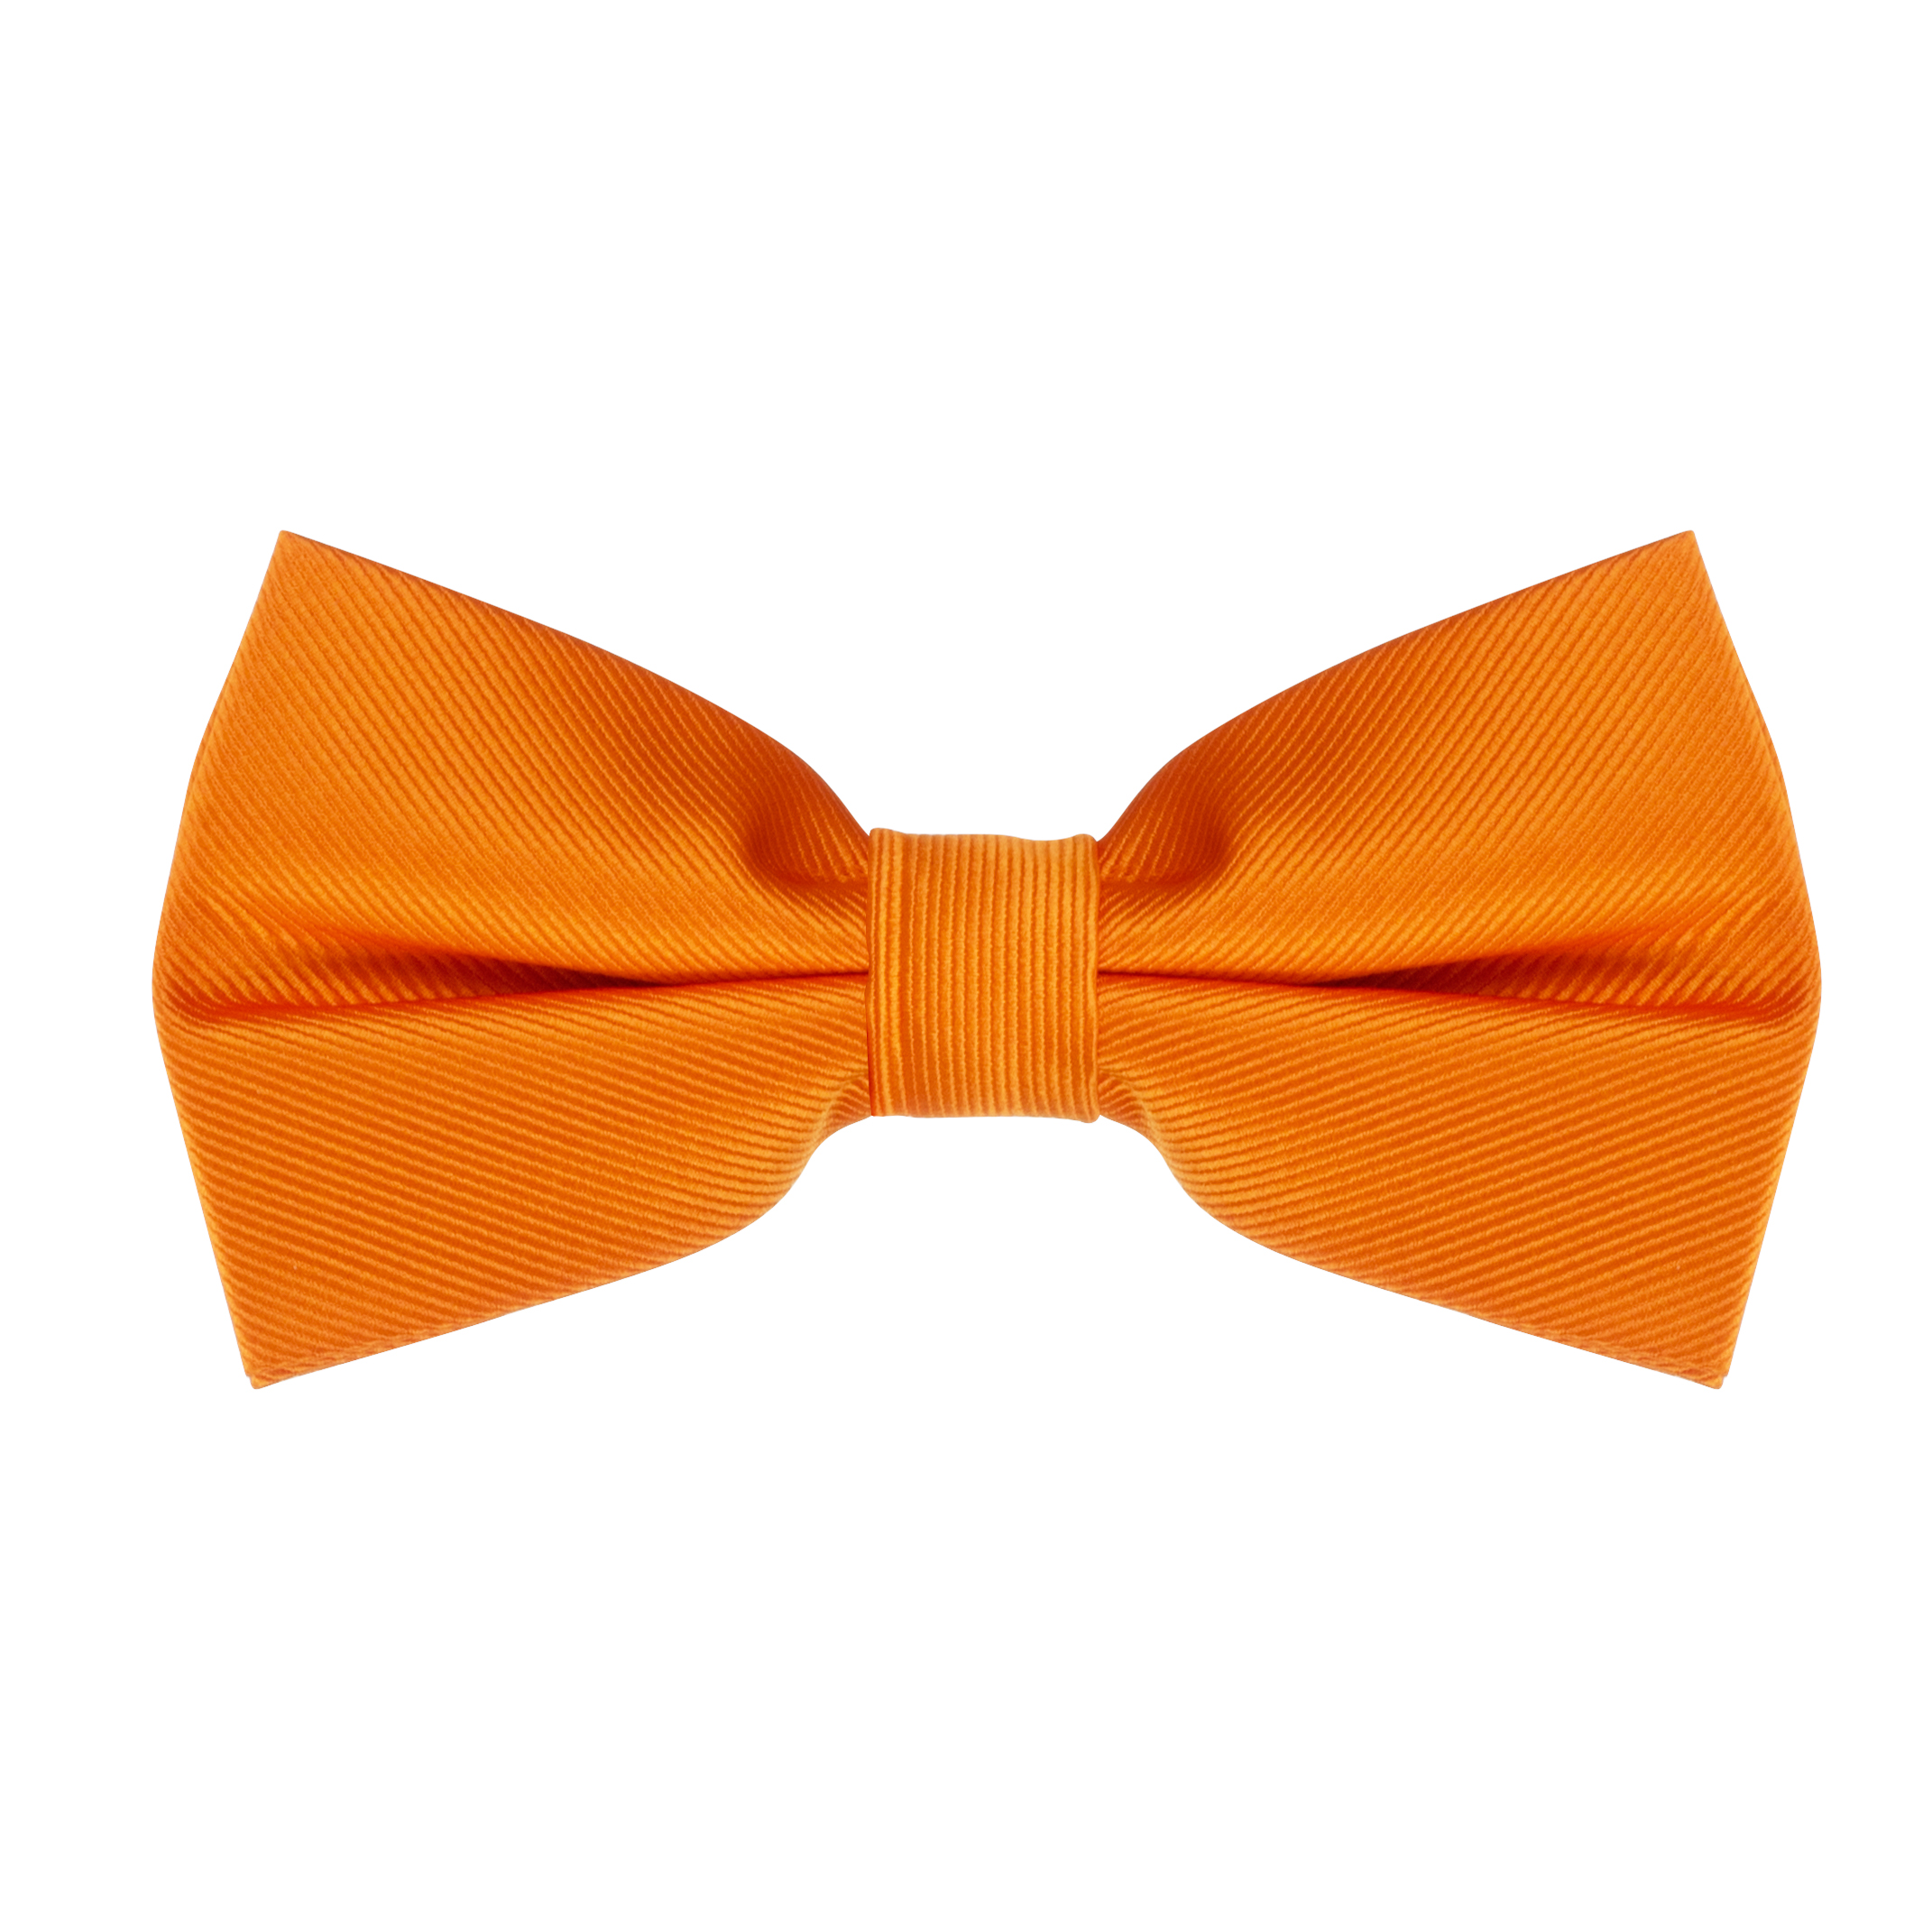 Bow Tie in Orange